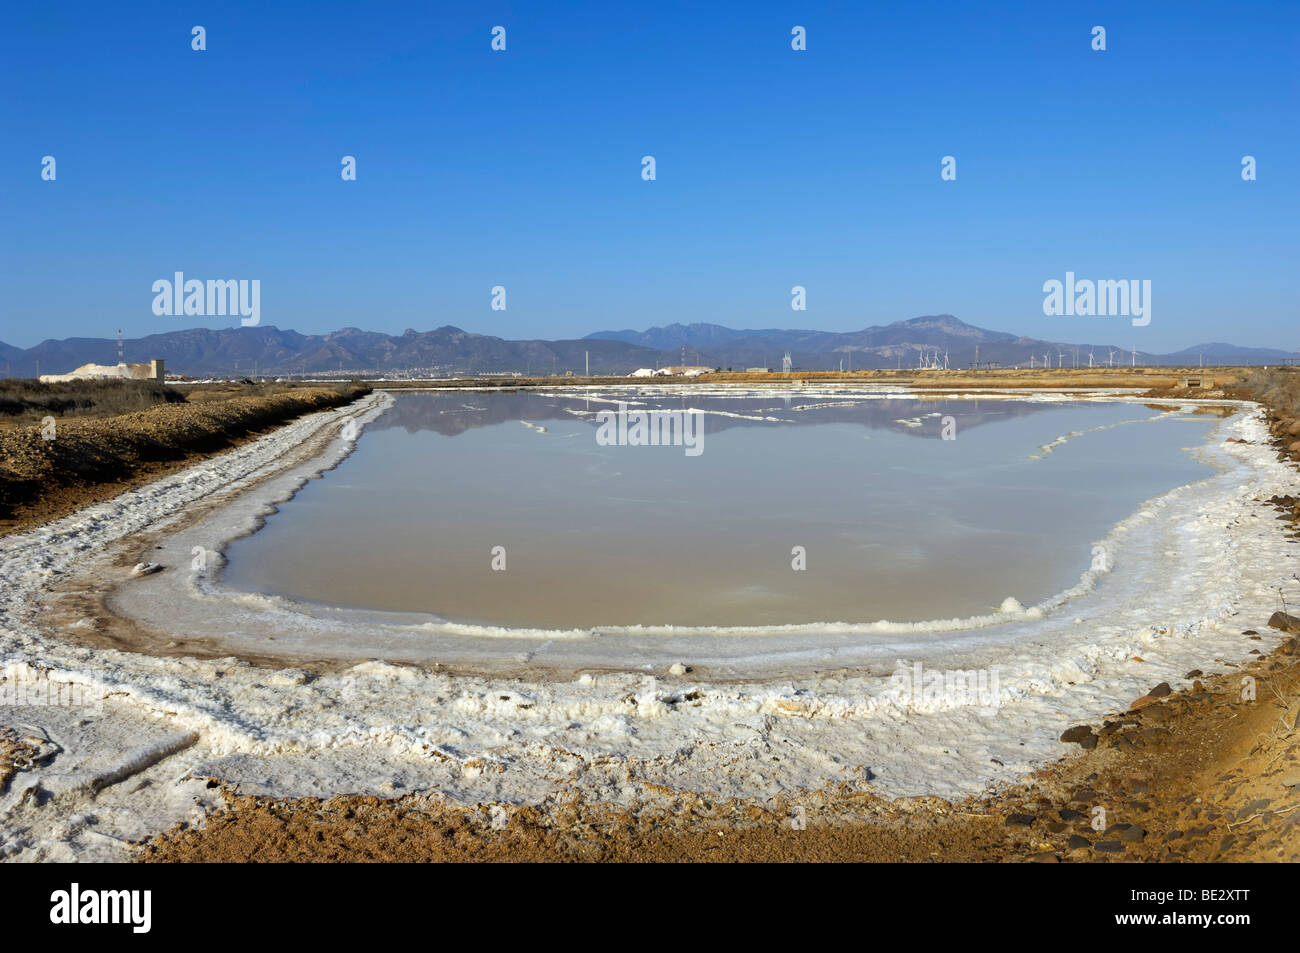 Salty shores of a salt lake, salt production, Cagliari, Sardinia, Italy, Europe Stock Photo